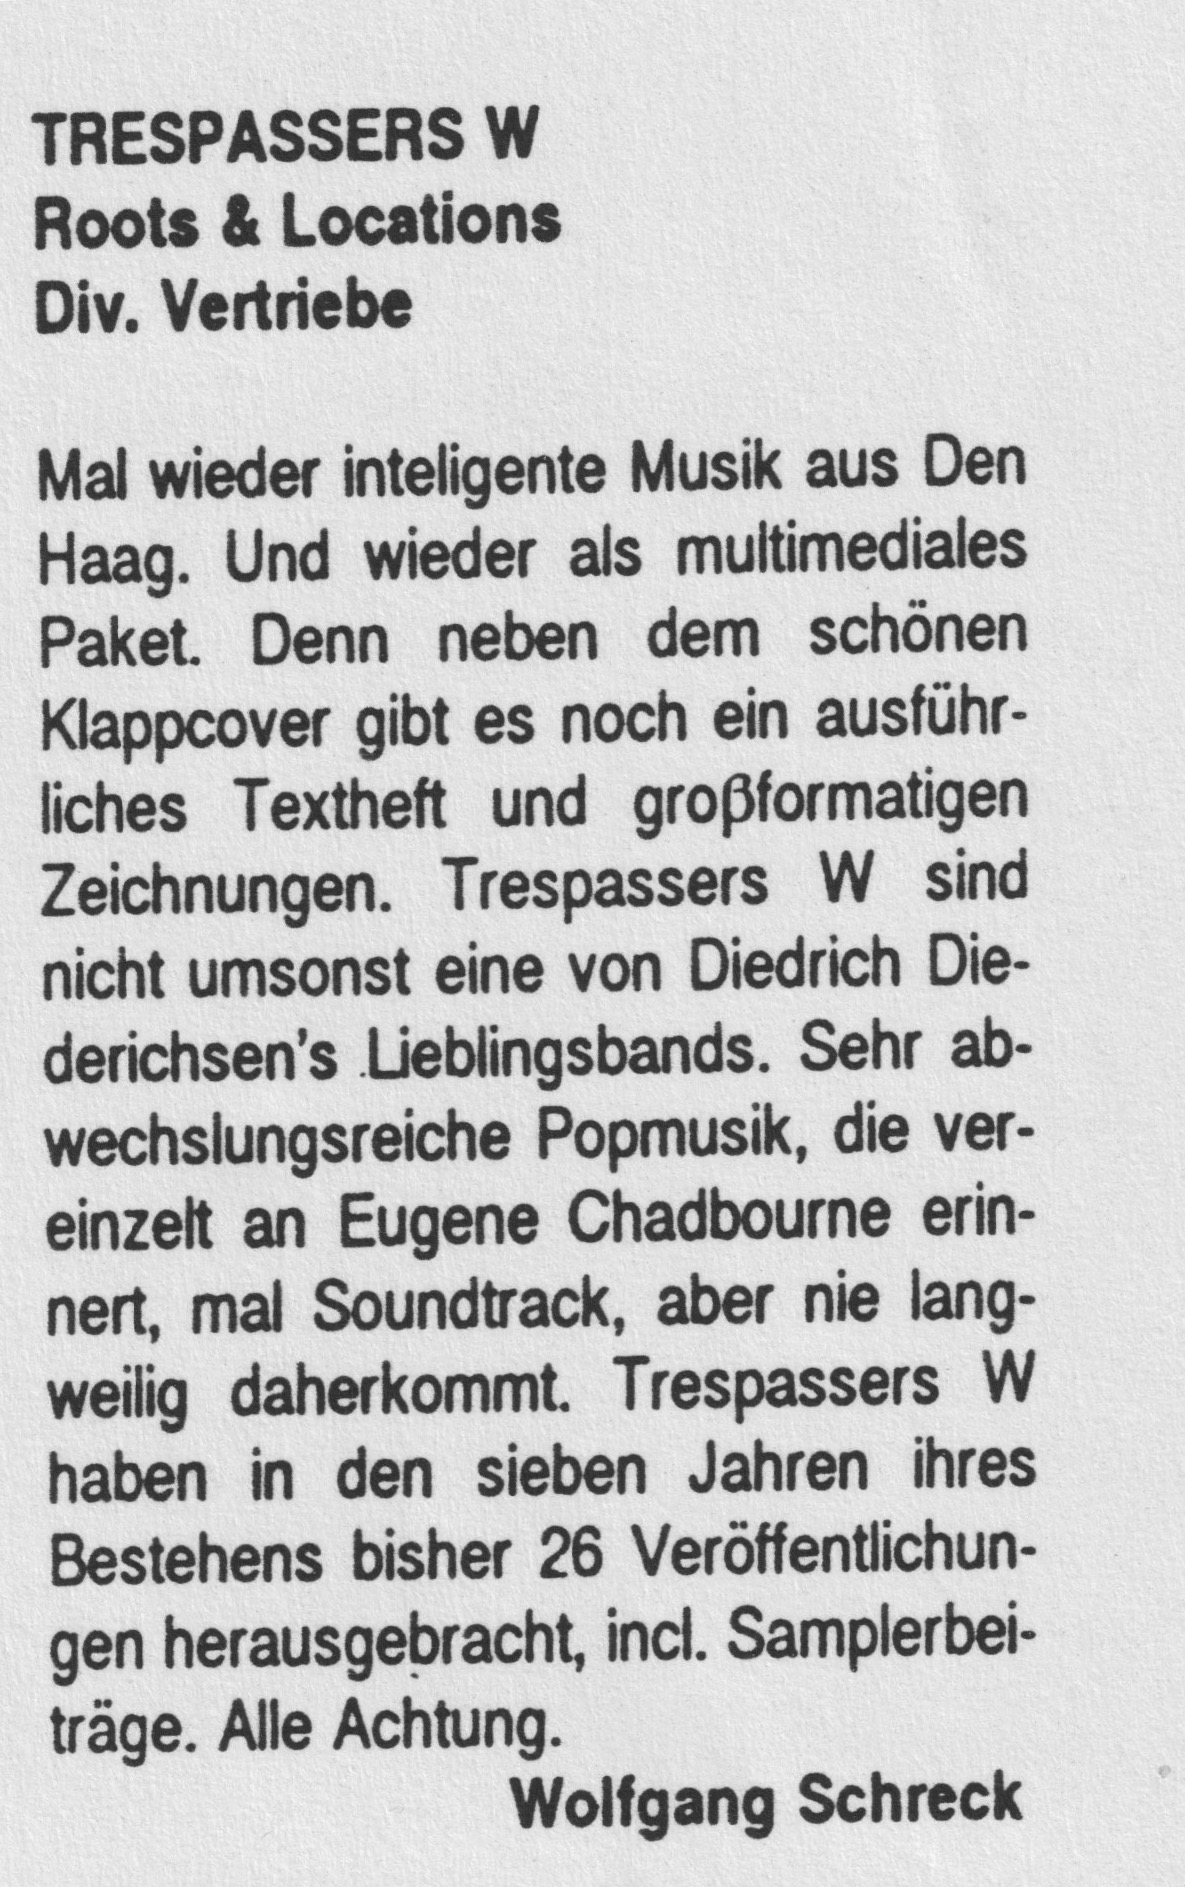 Wolfgang Schreck, EB/Metronome, oktober-november 1991, 7e jaargang, # 34